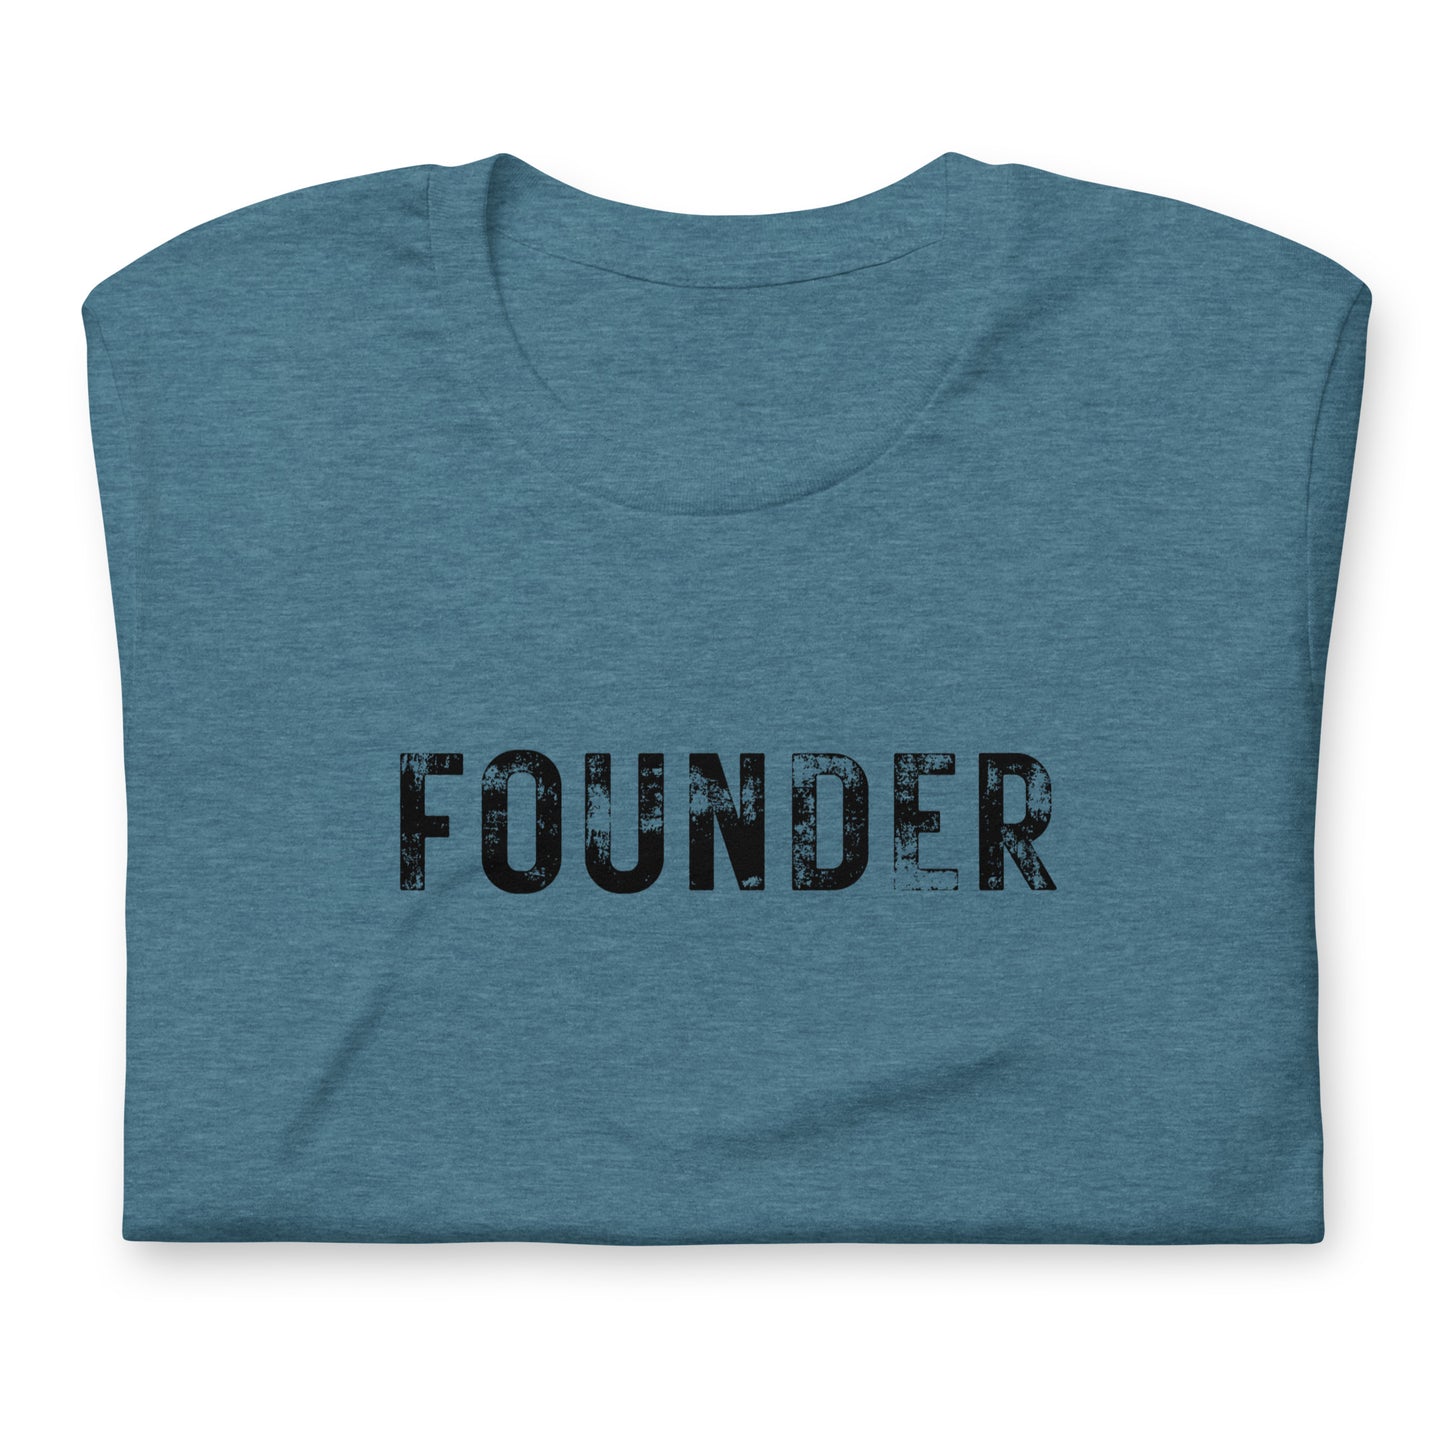 Founder Unisex T-Shirt